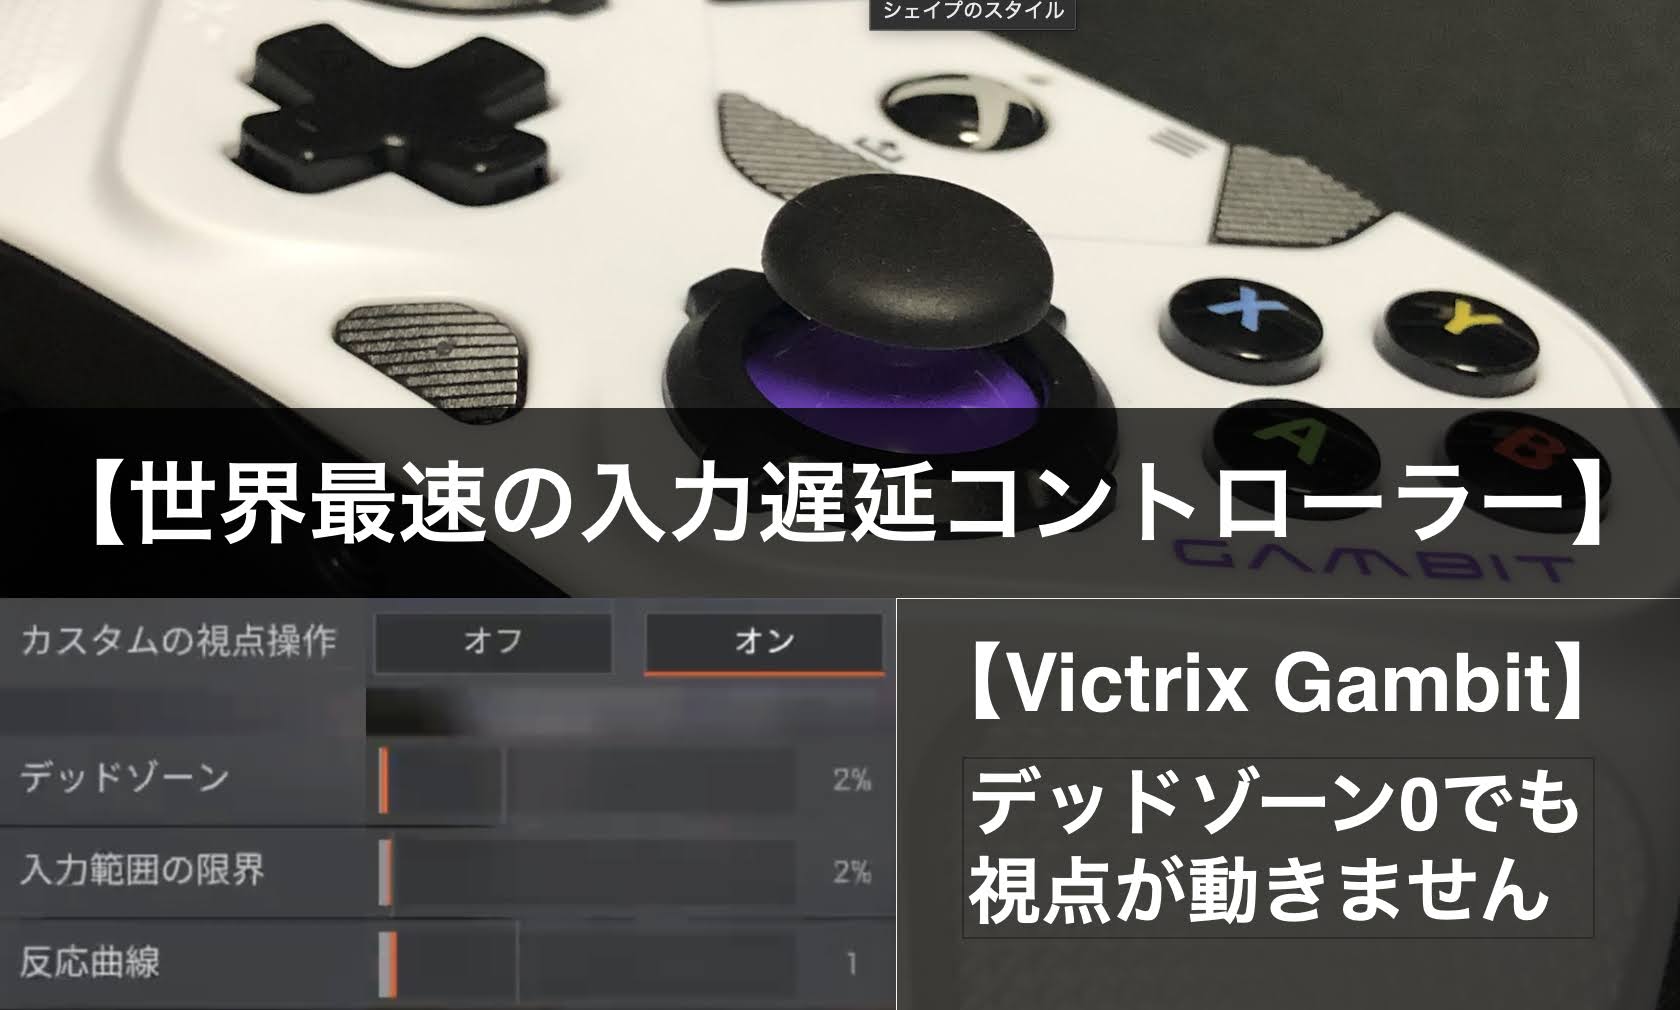 Victrix Gambit Xboxコントローラー - ocr.gov.np